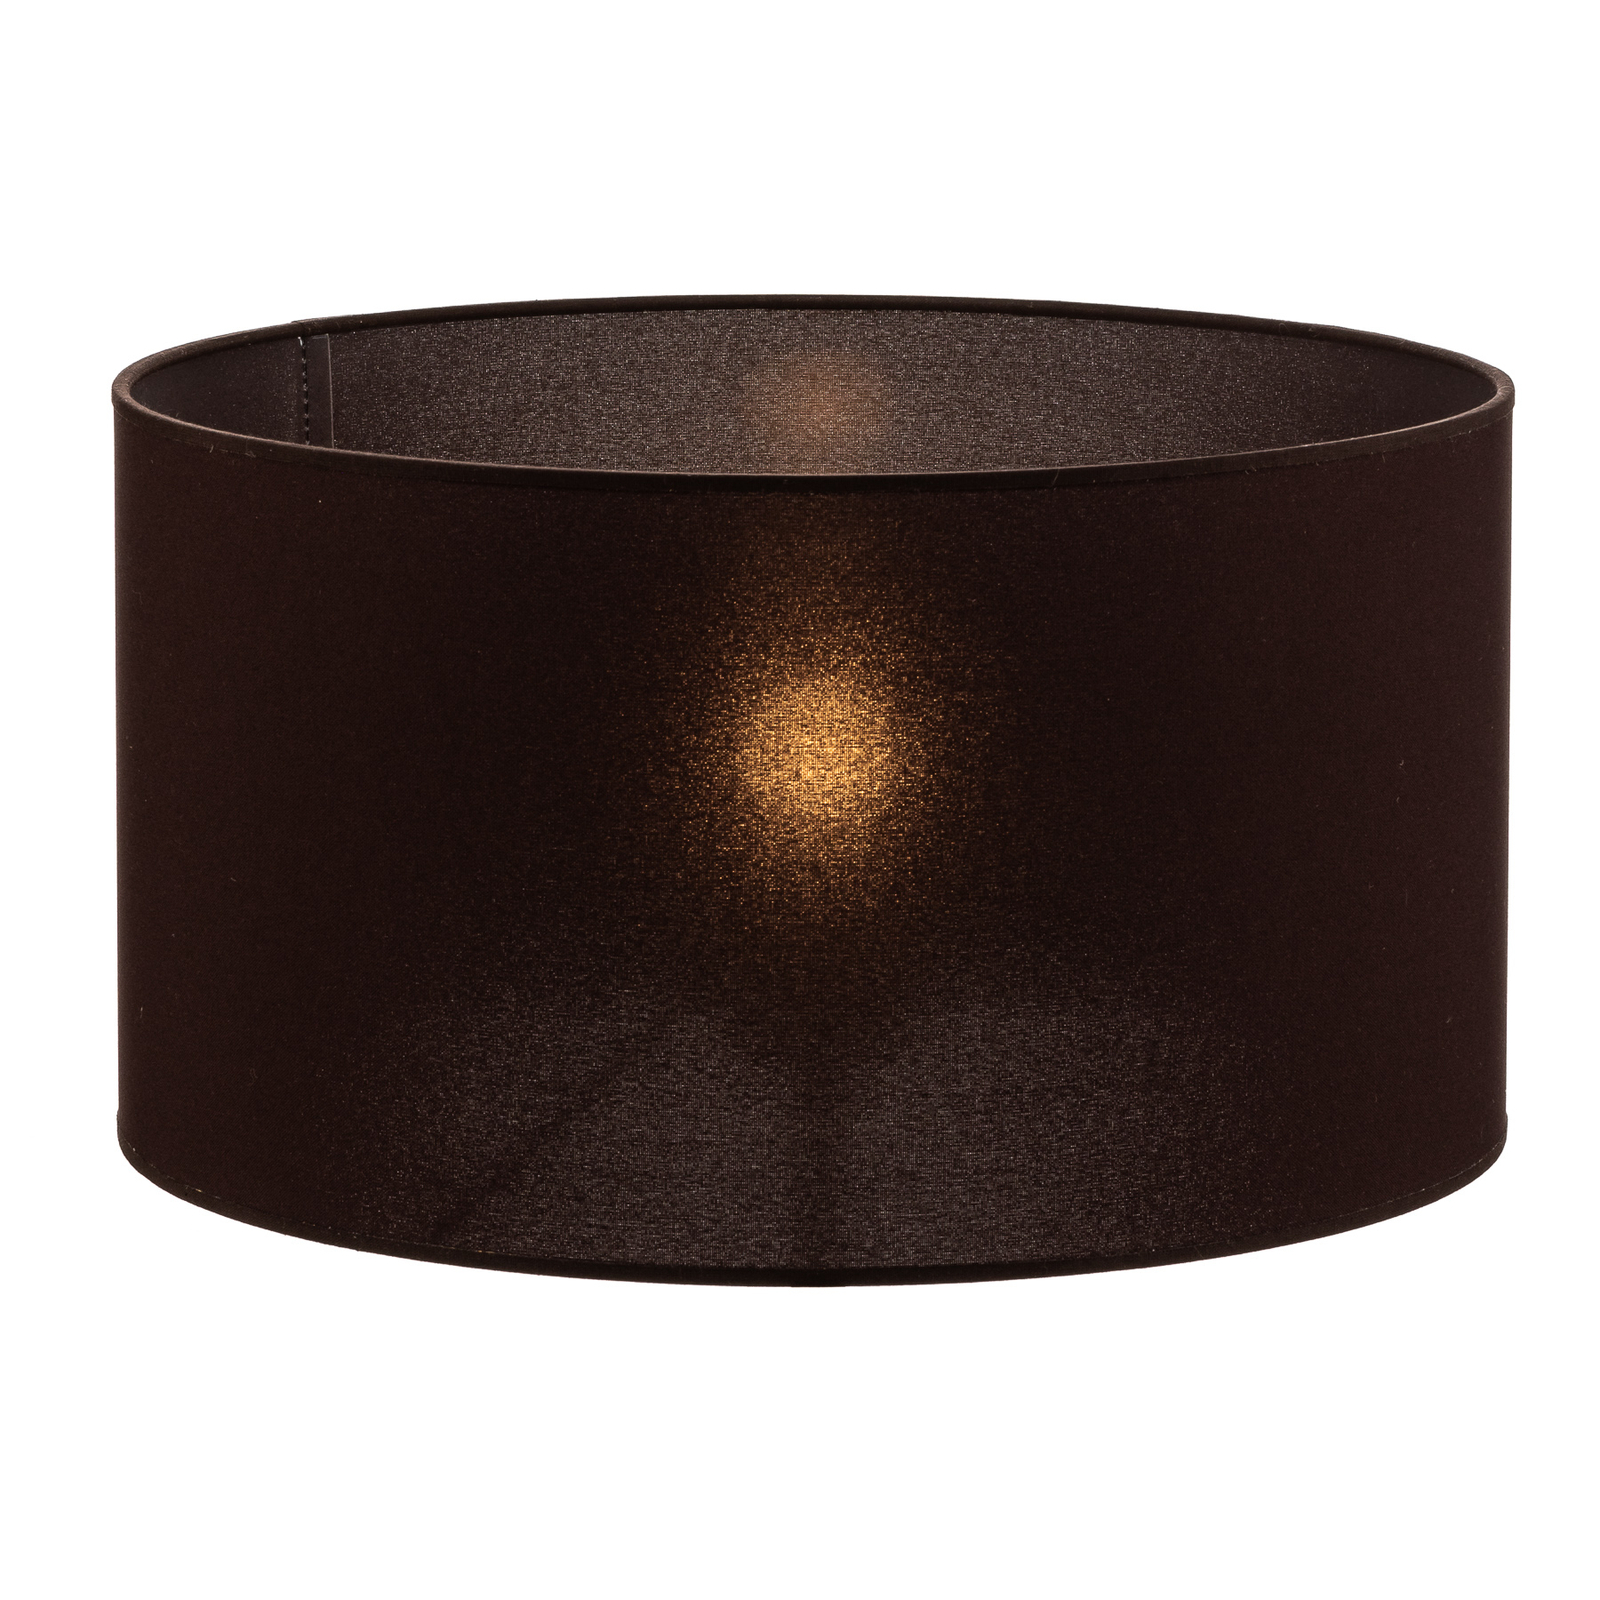 Roller lampshade dark brown Ø 40 cm height 22 cm